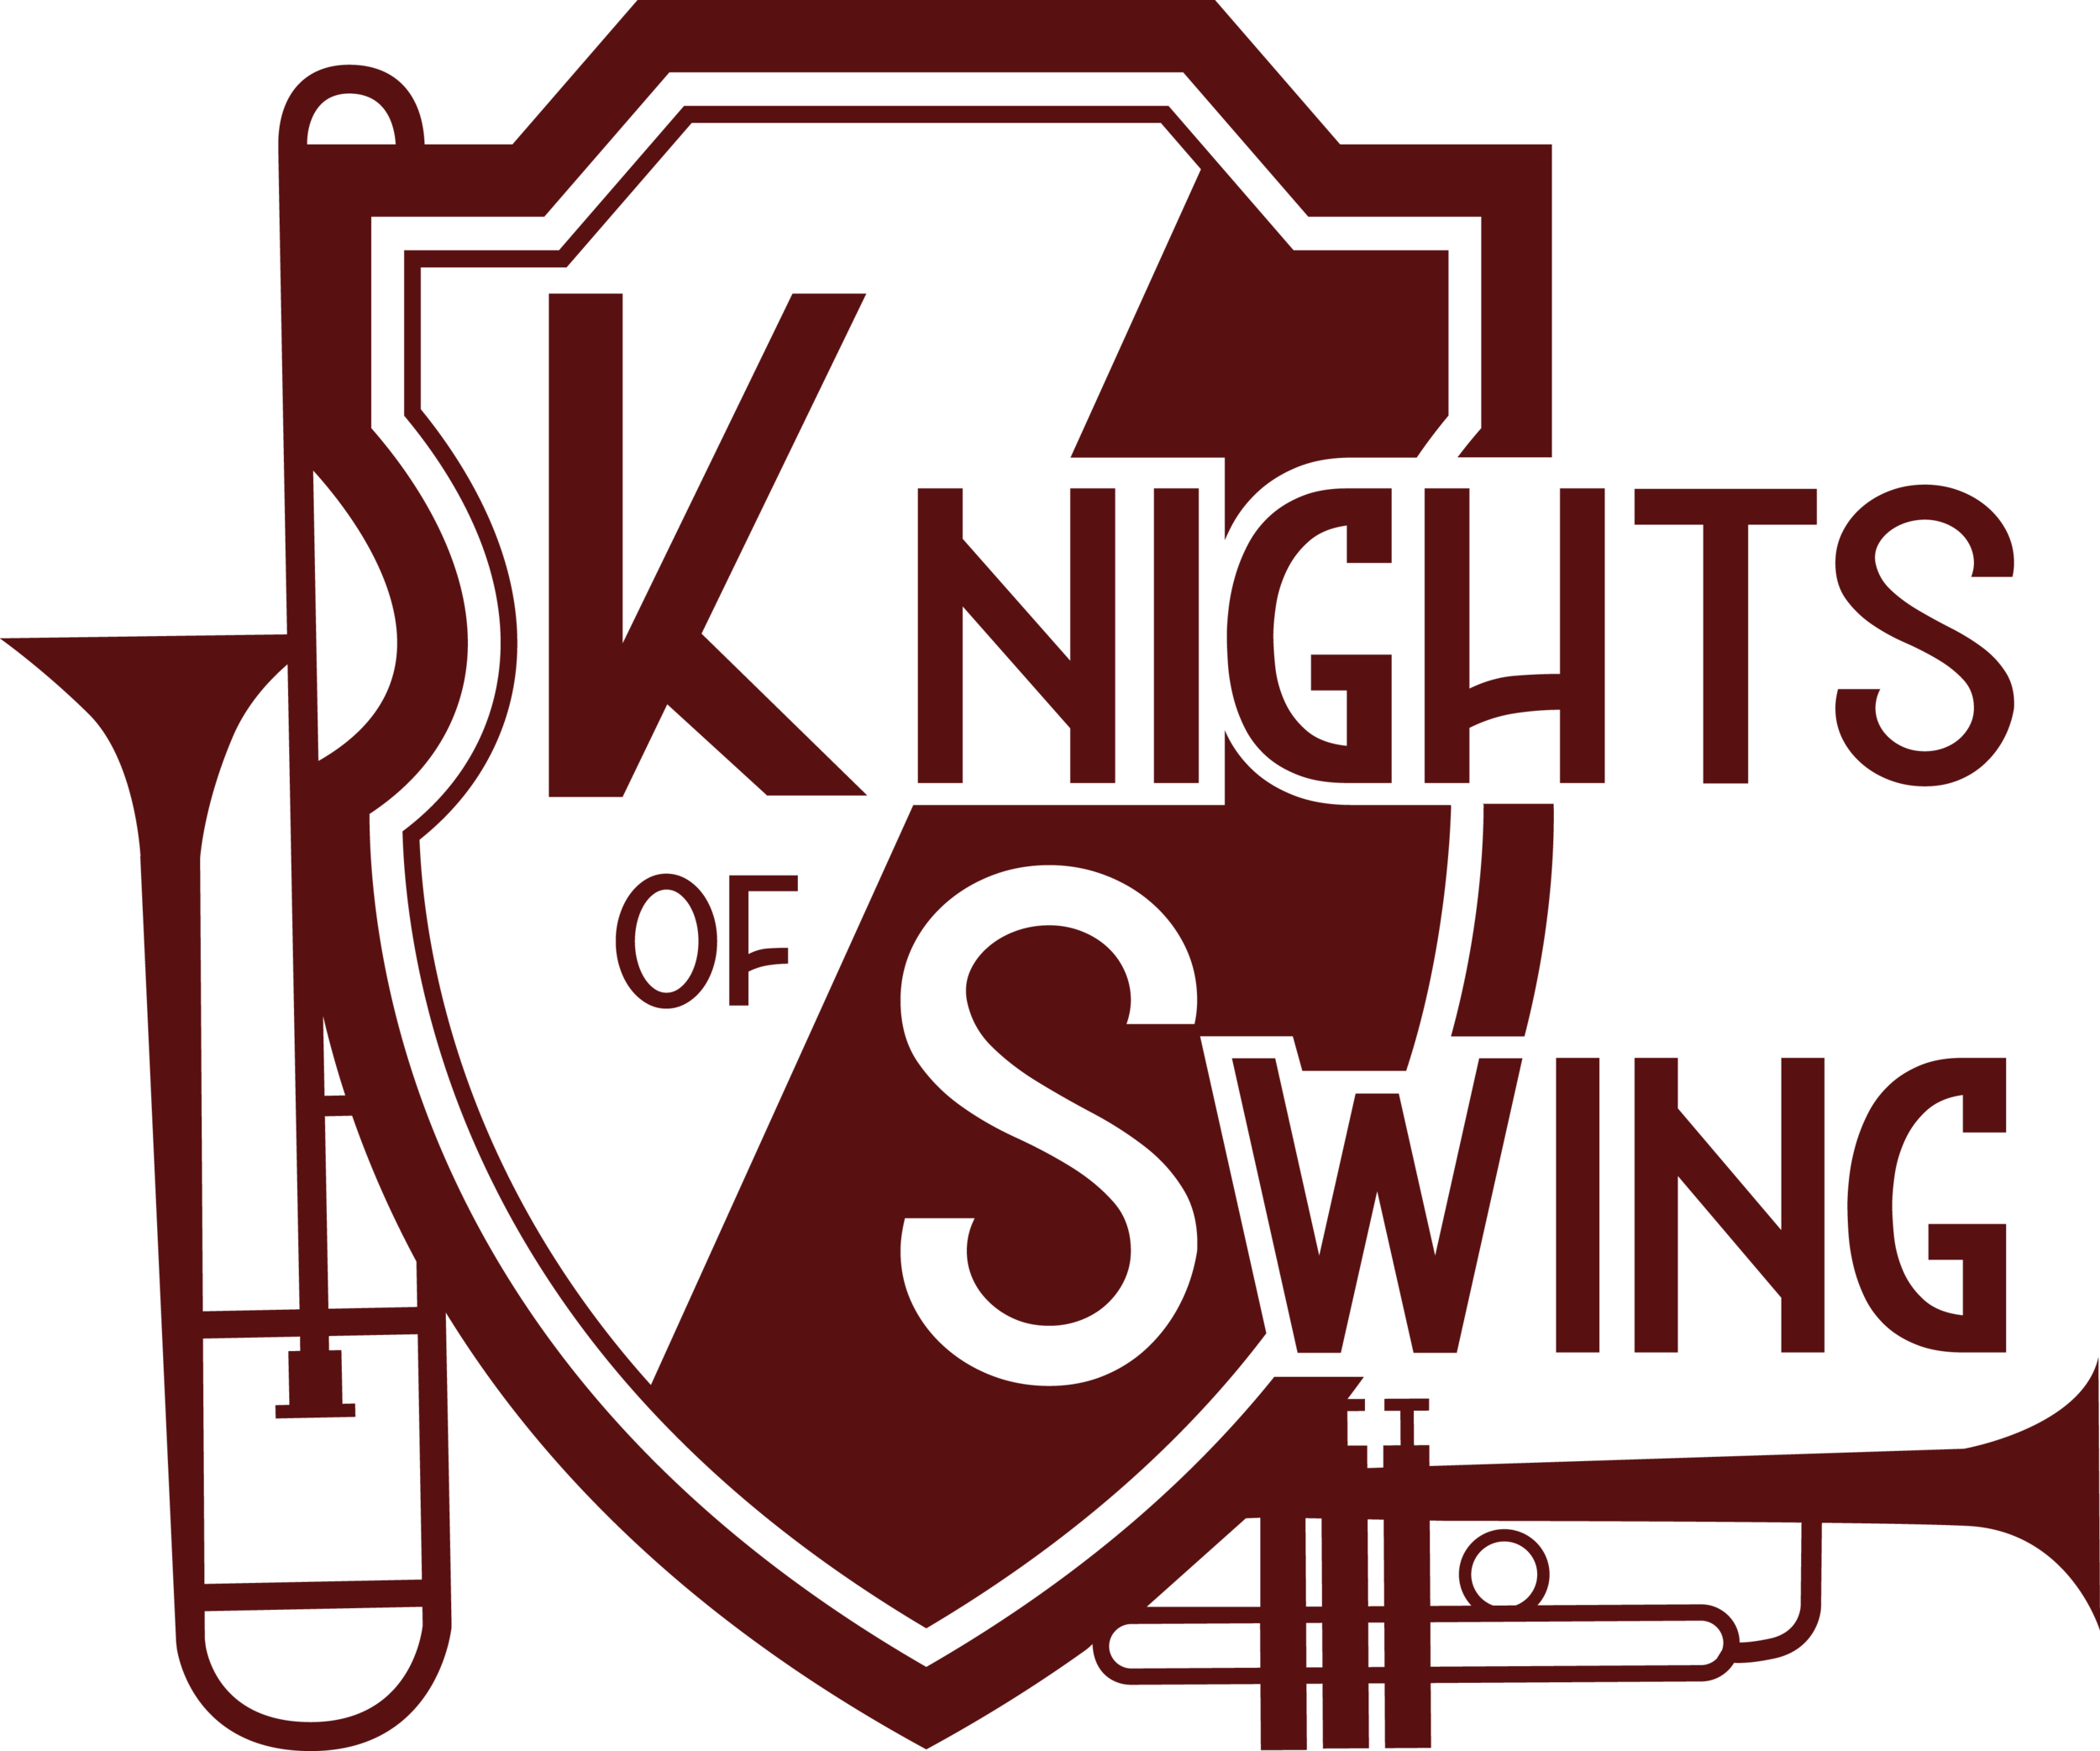 Knights of Swing